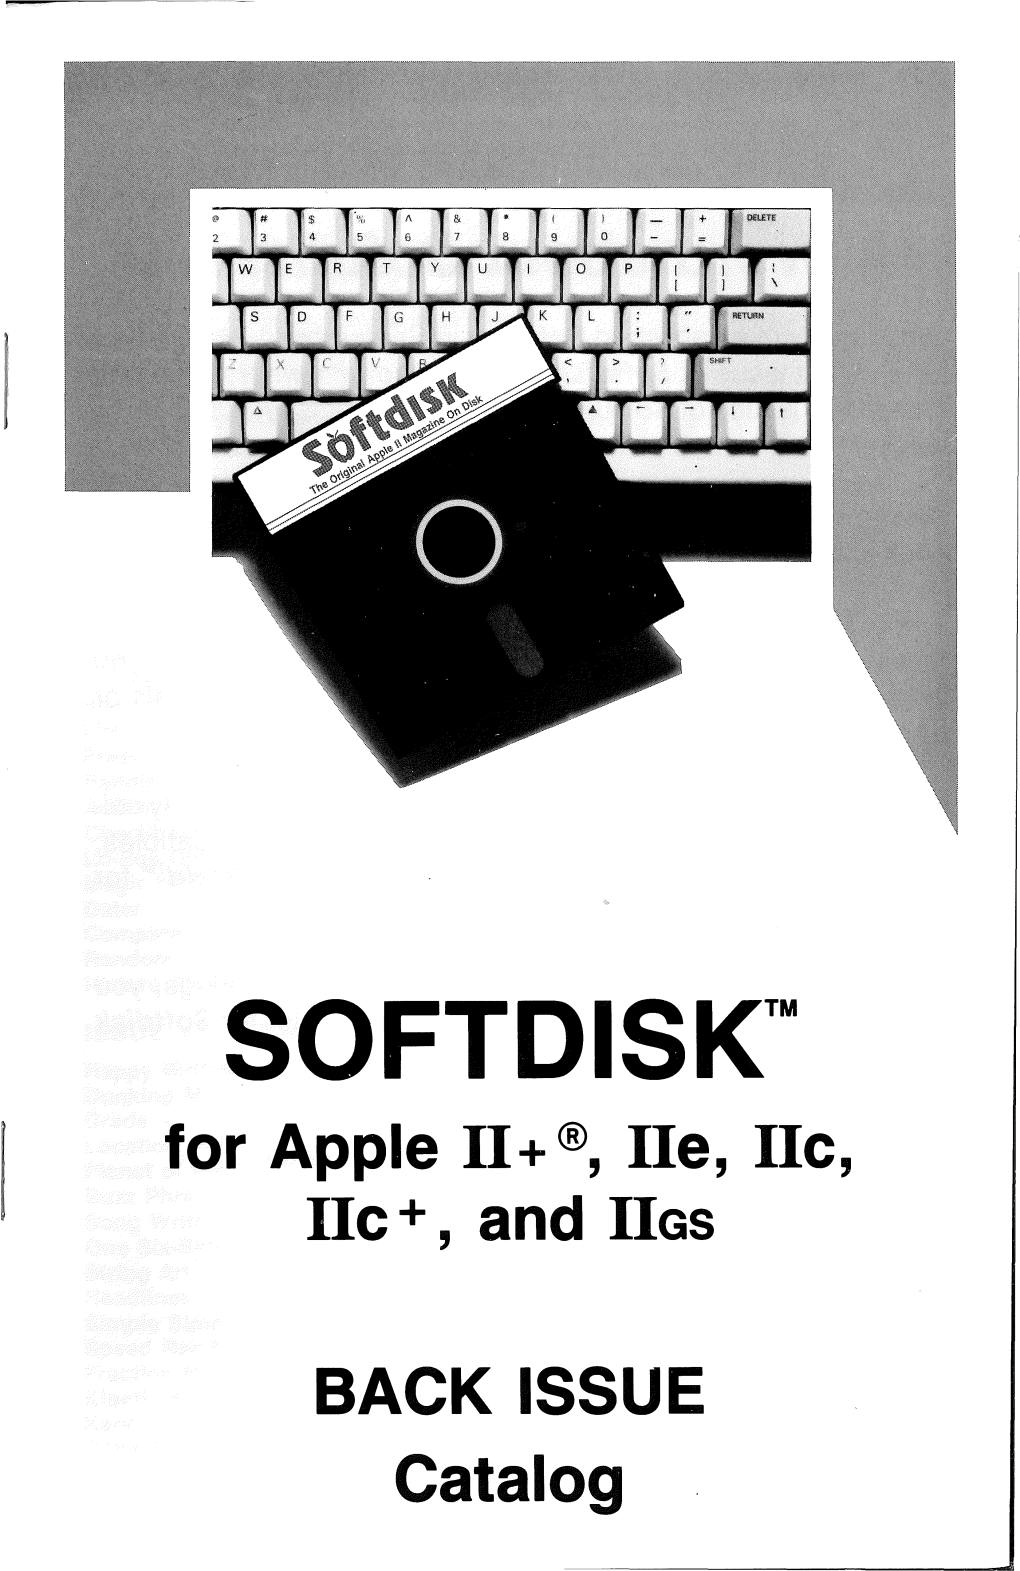 SOFTDISK™ for Apple 11+ ®, Lie, Ilc, Ilc +, and IIGS